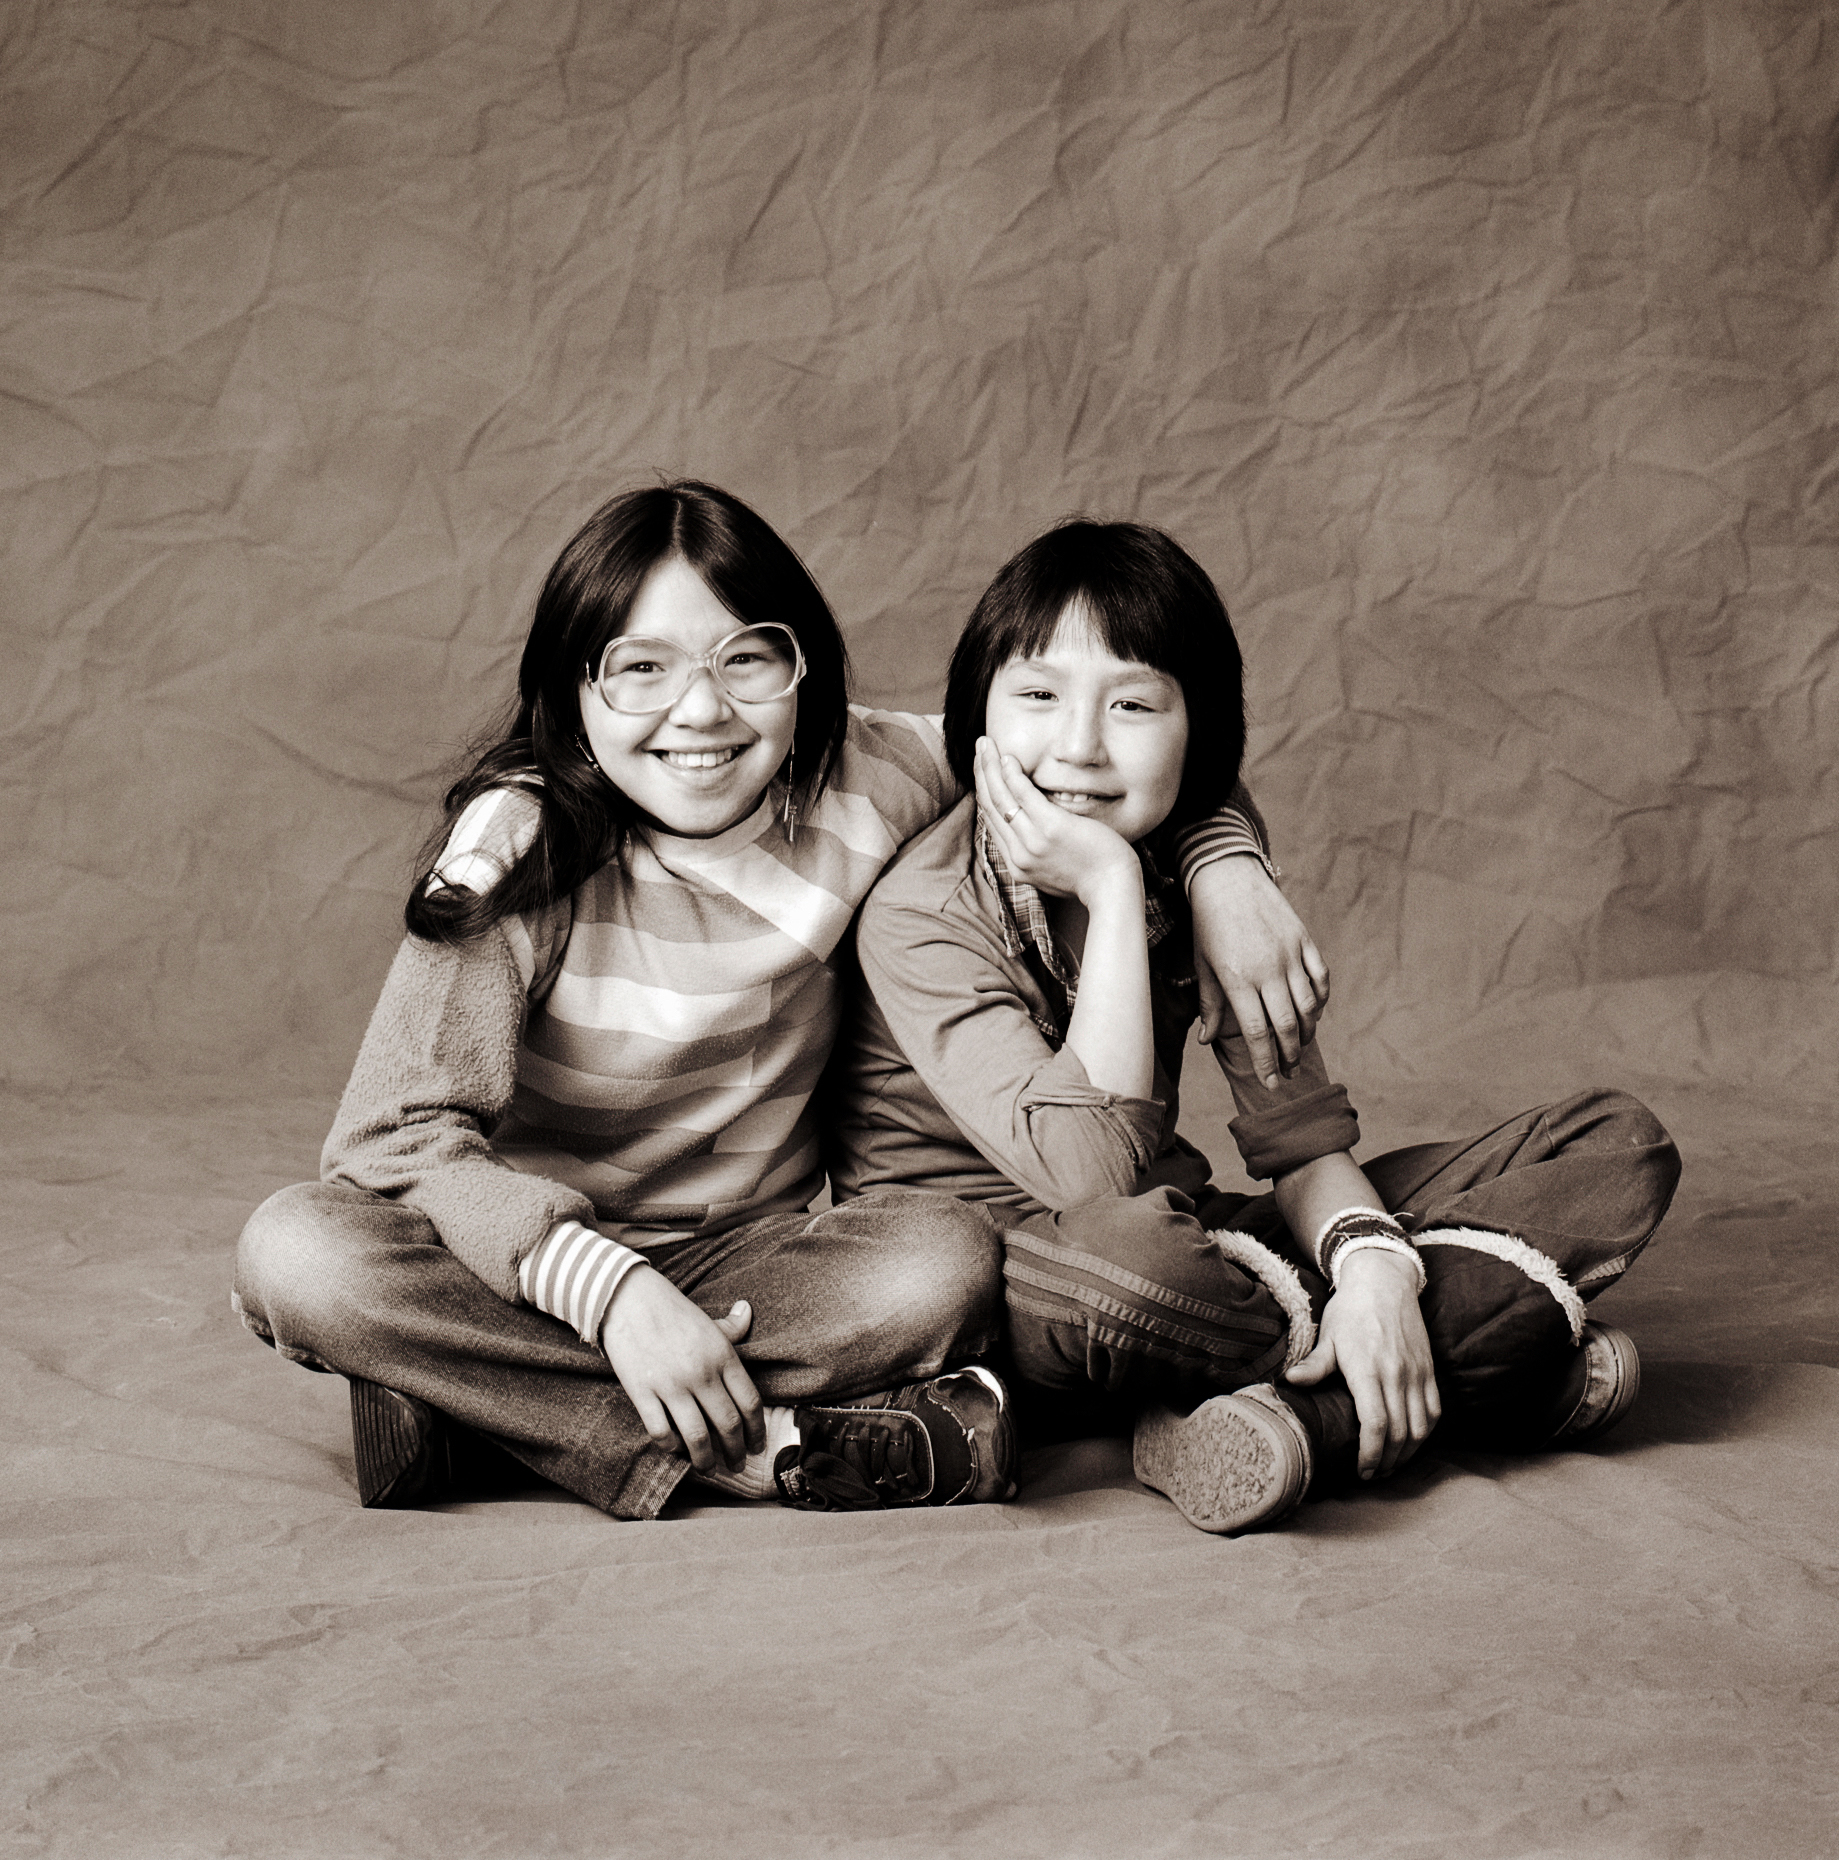 Black & white studio portrait of two Inuit girls in a photography studio in Iqaluit, Nunavut, Canada